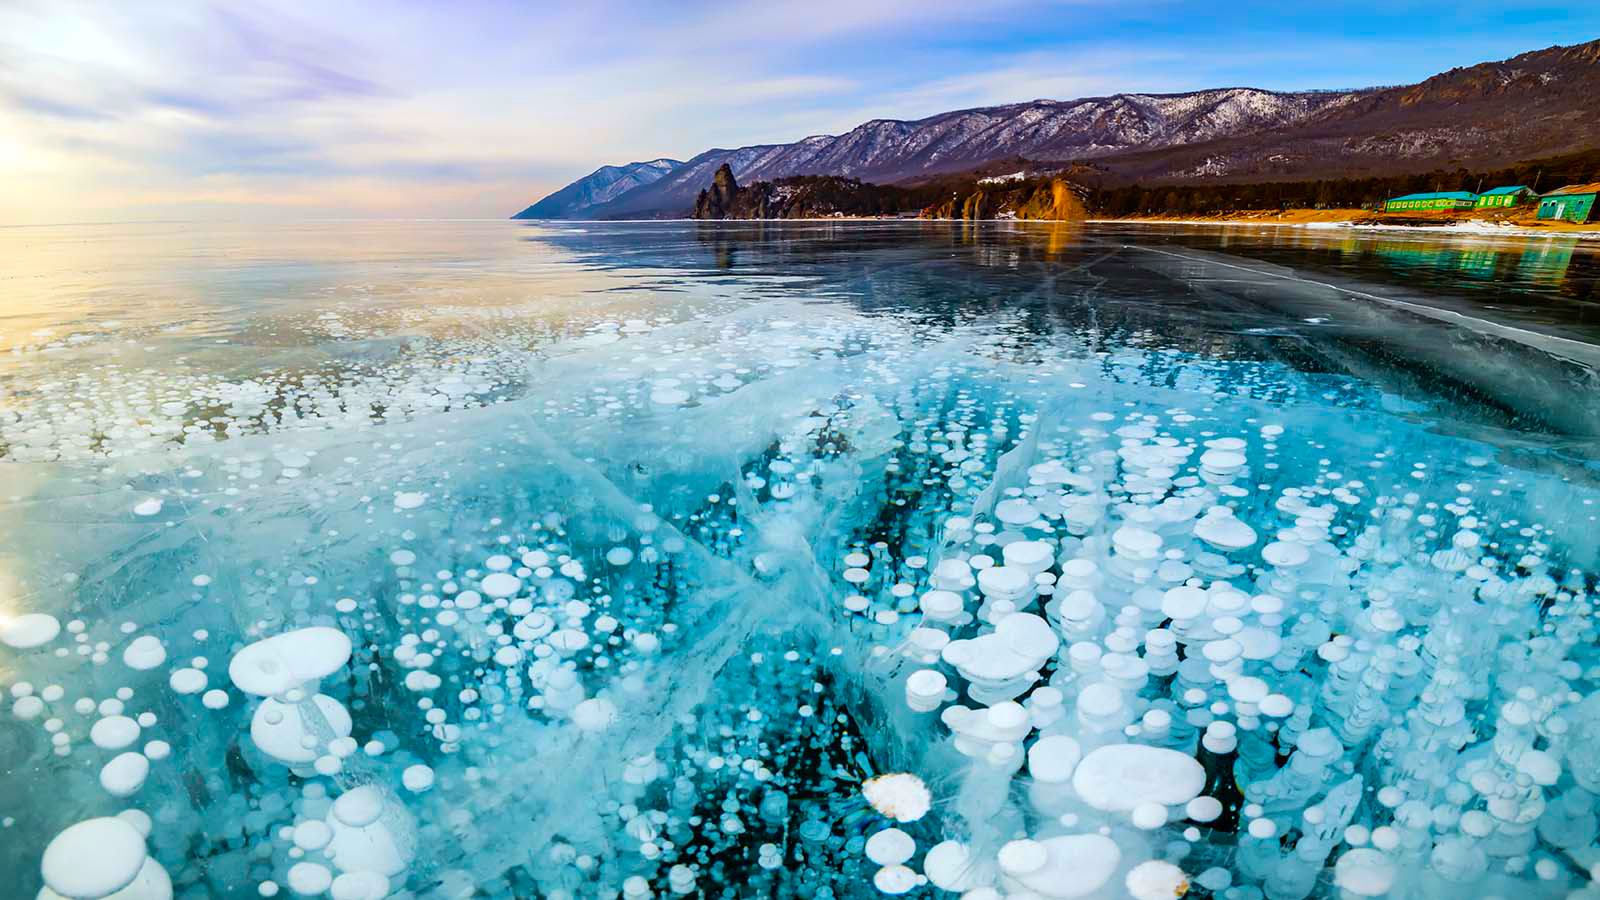 Мелкий лед на воде. Голоустное Байкал пузырьки. Озеро Байкал подо льдом. Озеро Байкал лед. Озеро Байкал пузырьковый лед.